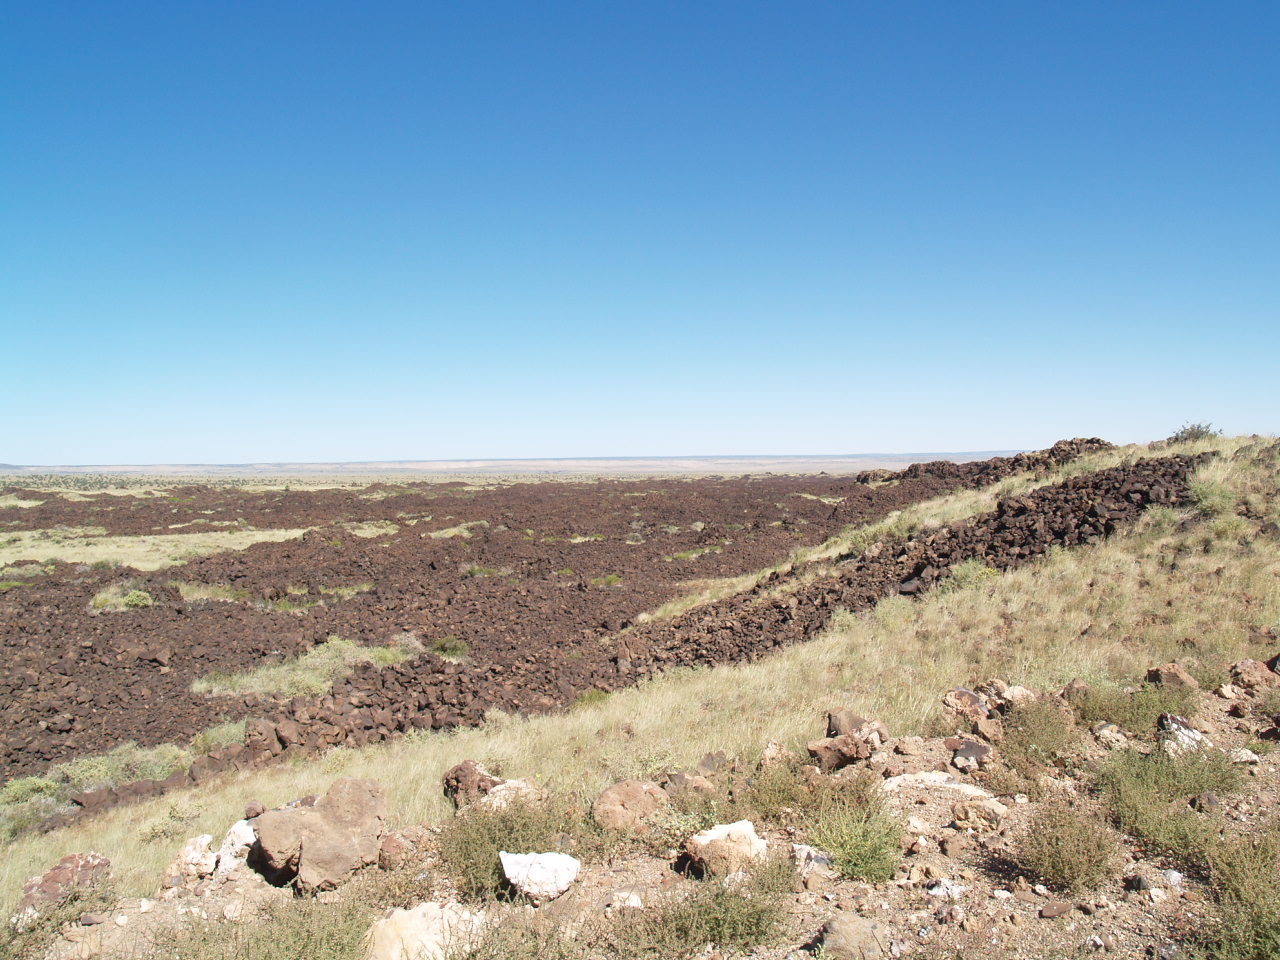 A photo of a desert landscape